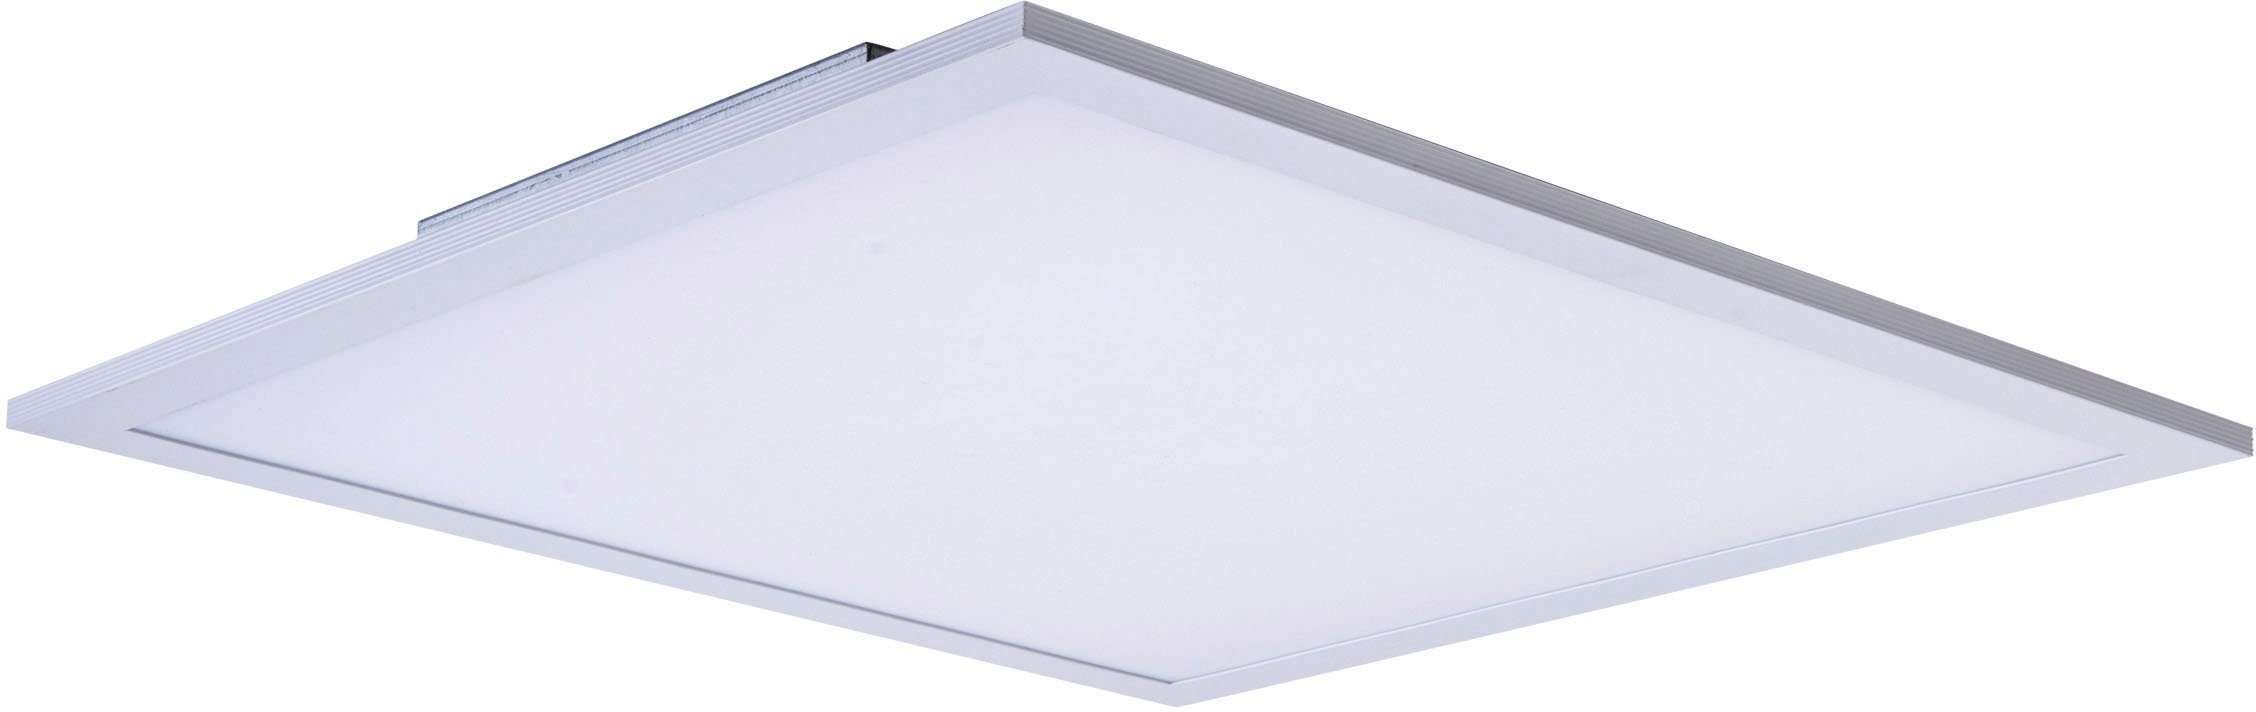 näve LED 6cm, Panel LED LED, Nicola, integriert, neutralweiß 45x45cm, fest H: Lichtfarbe Aufbaupanel Neutralweiß, 120 weiß